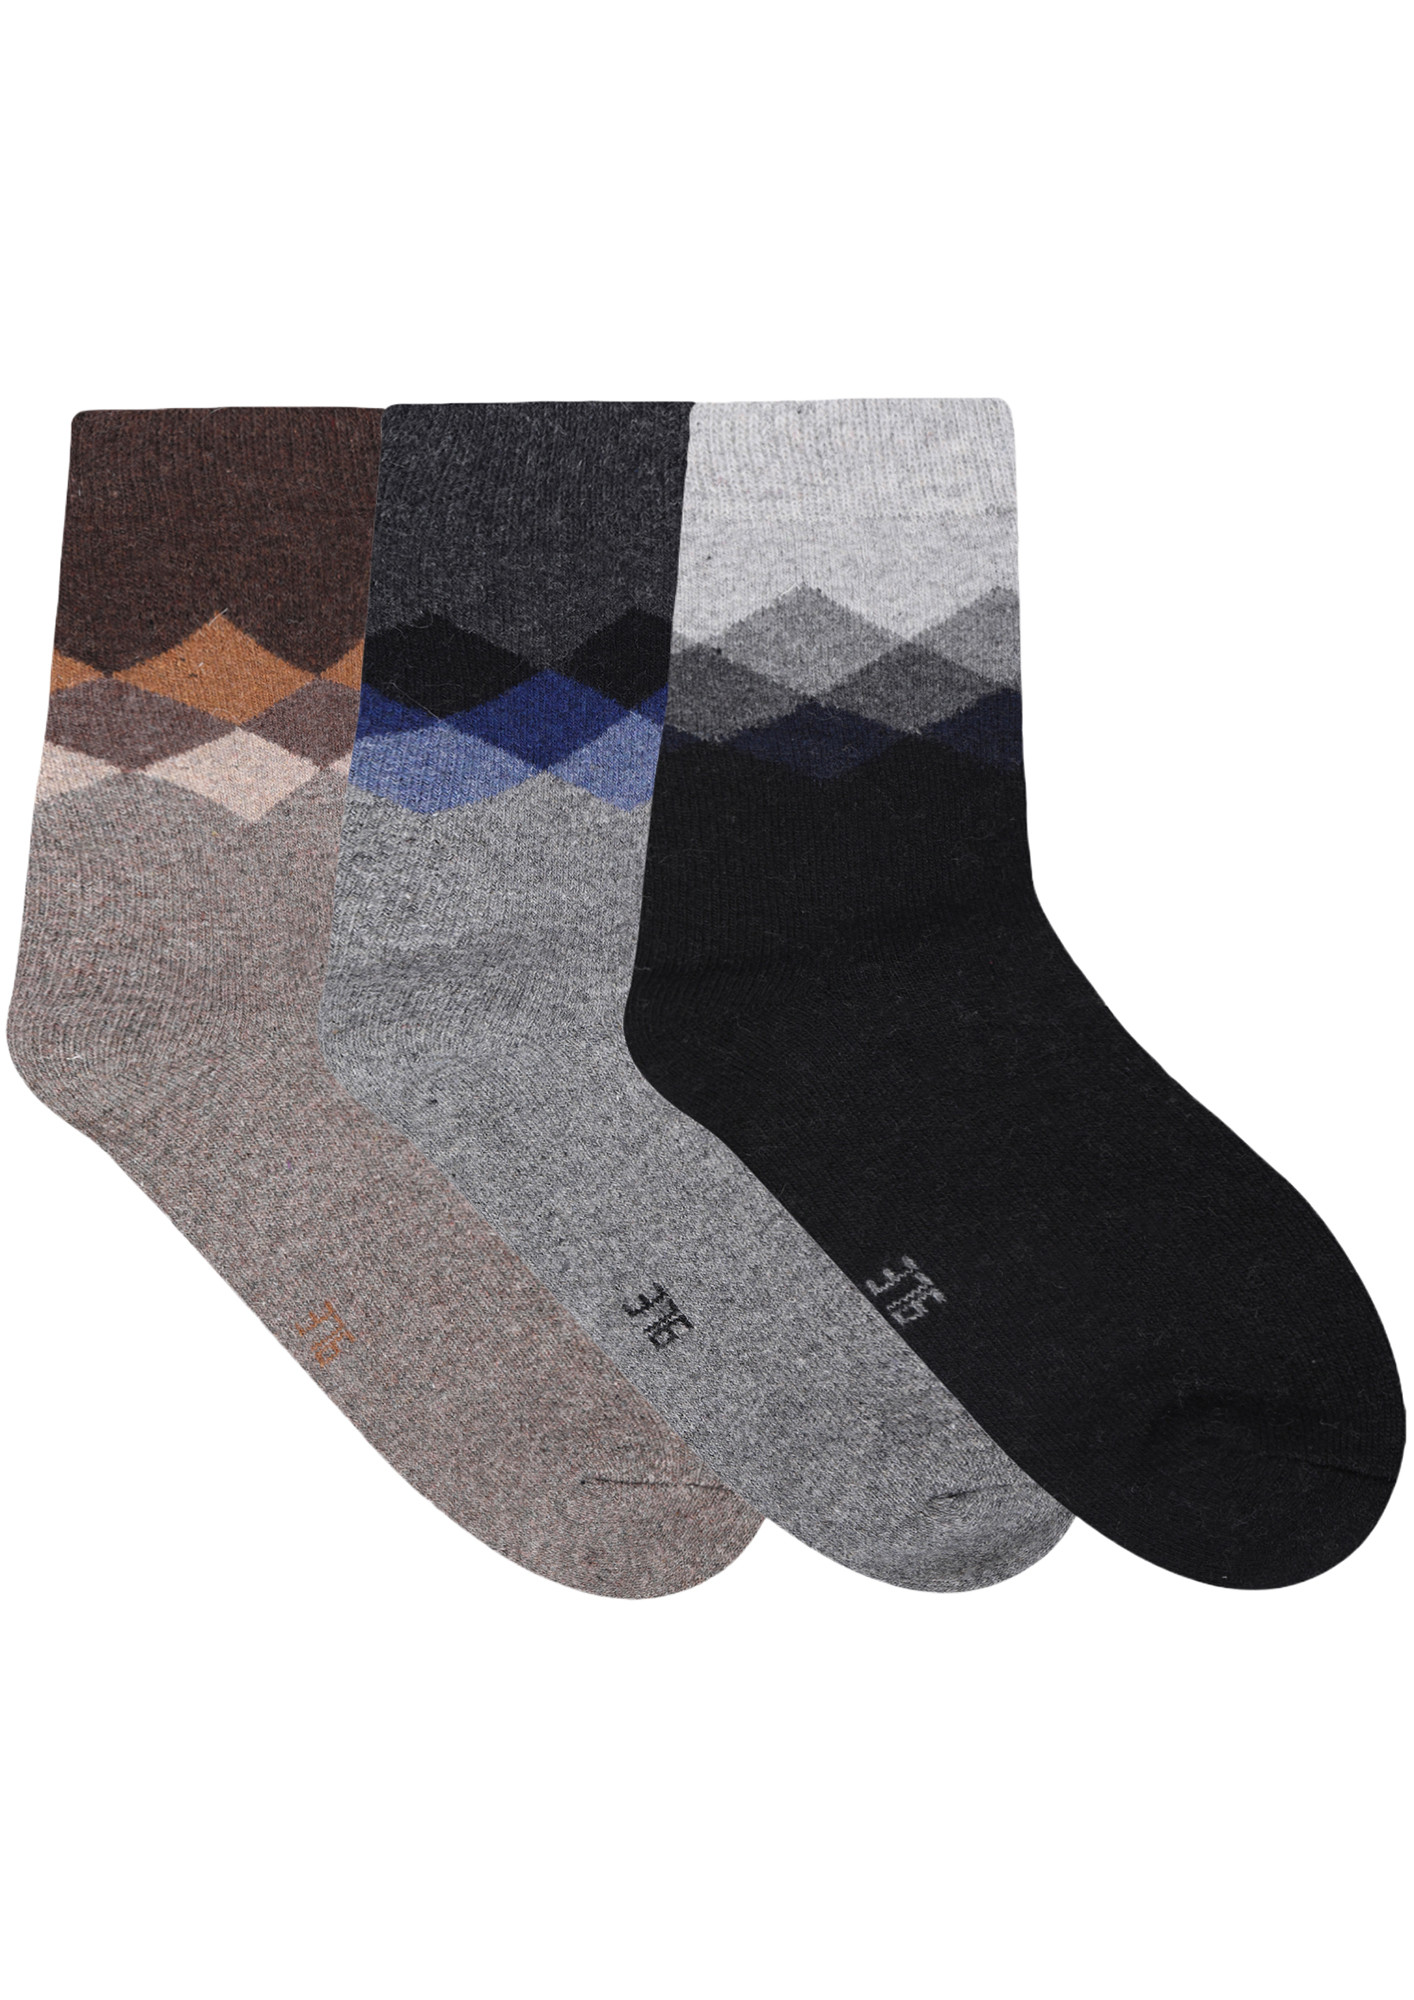 NEXT2SKIN Men's Woollen Regular length Socks (Pack of 3) (Brown,Dark Grey,Light Grey)